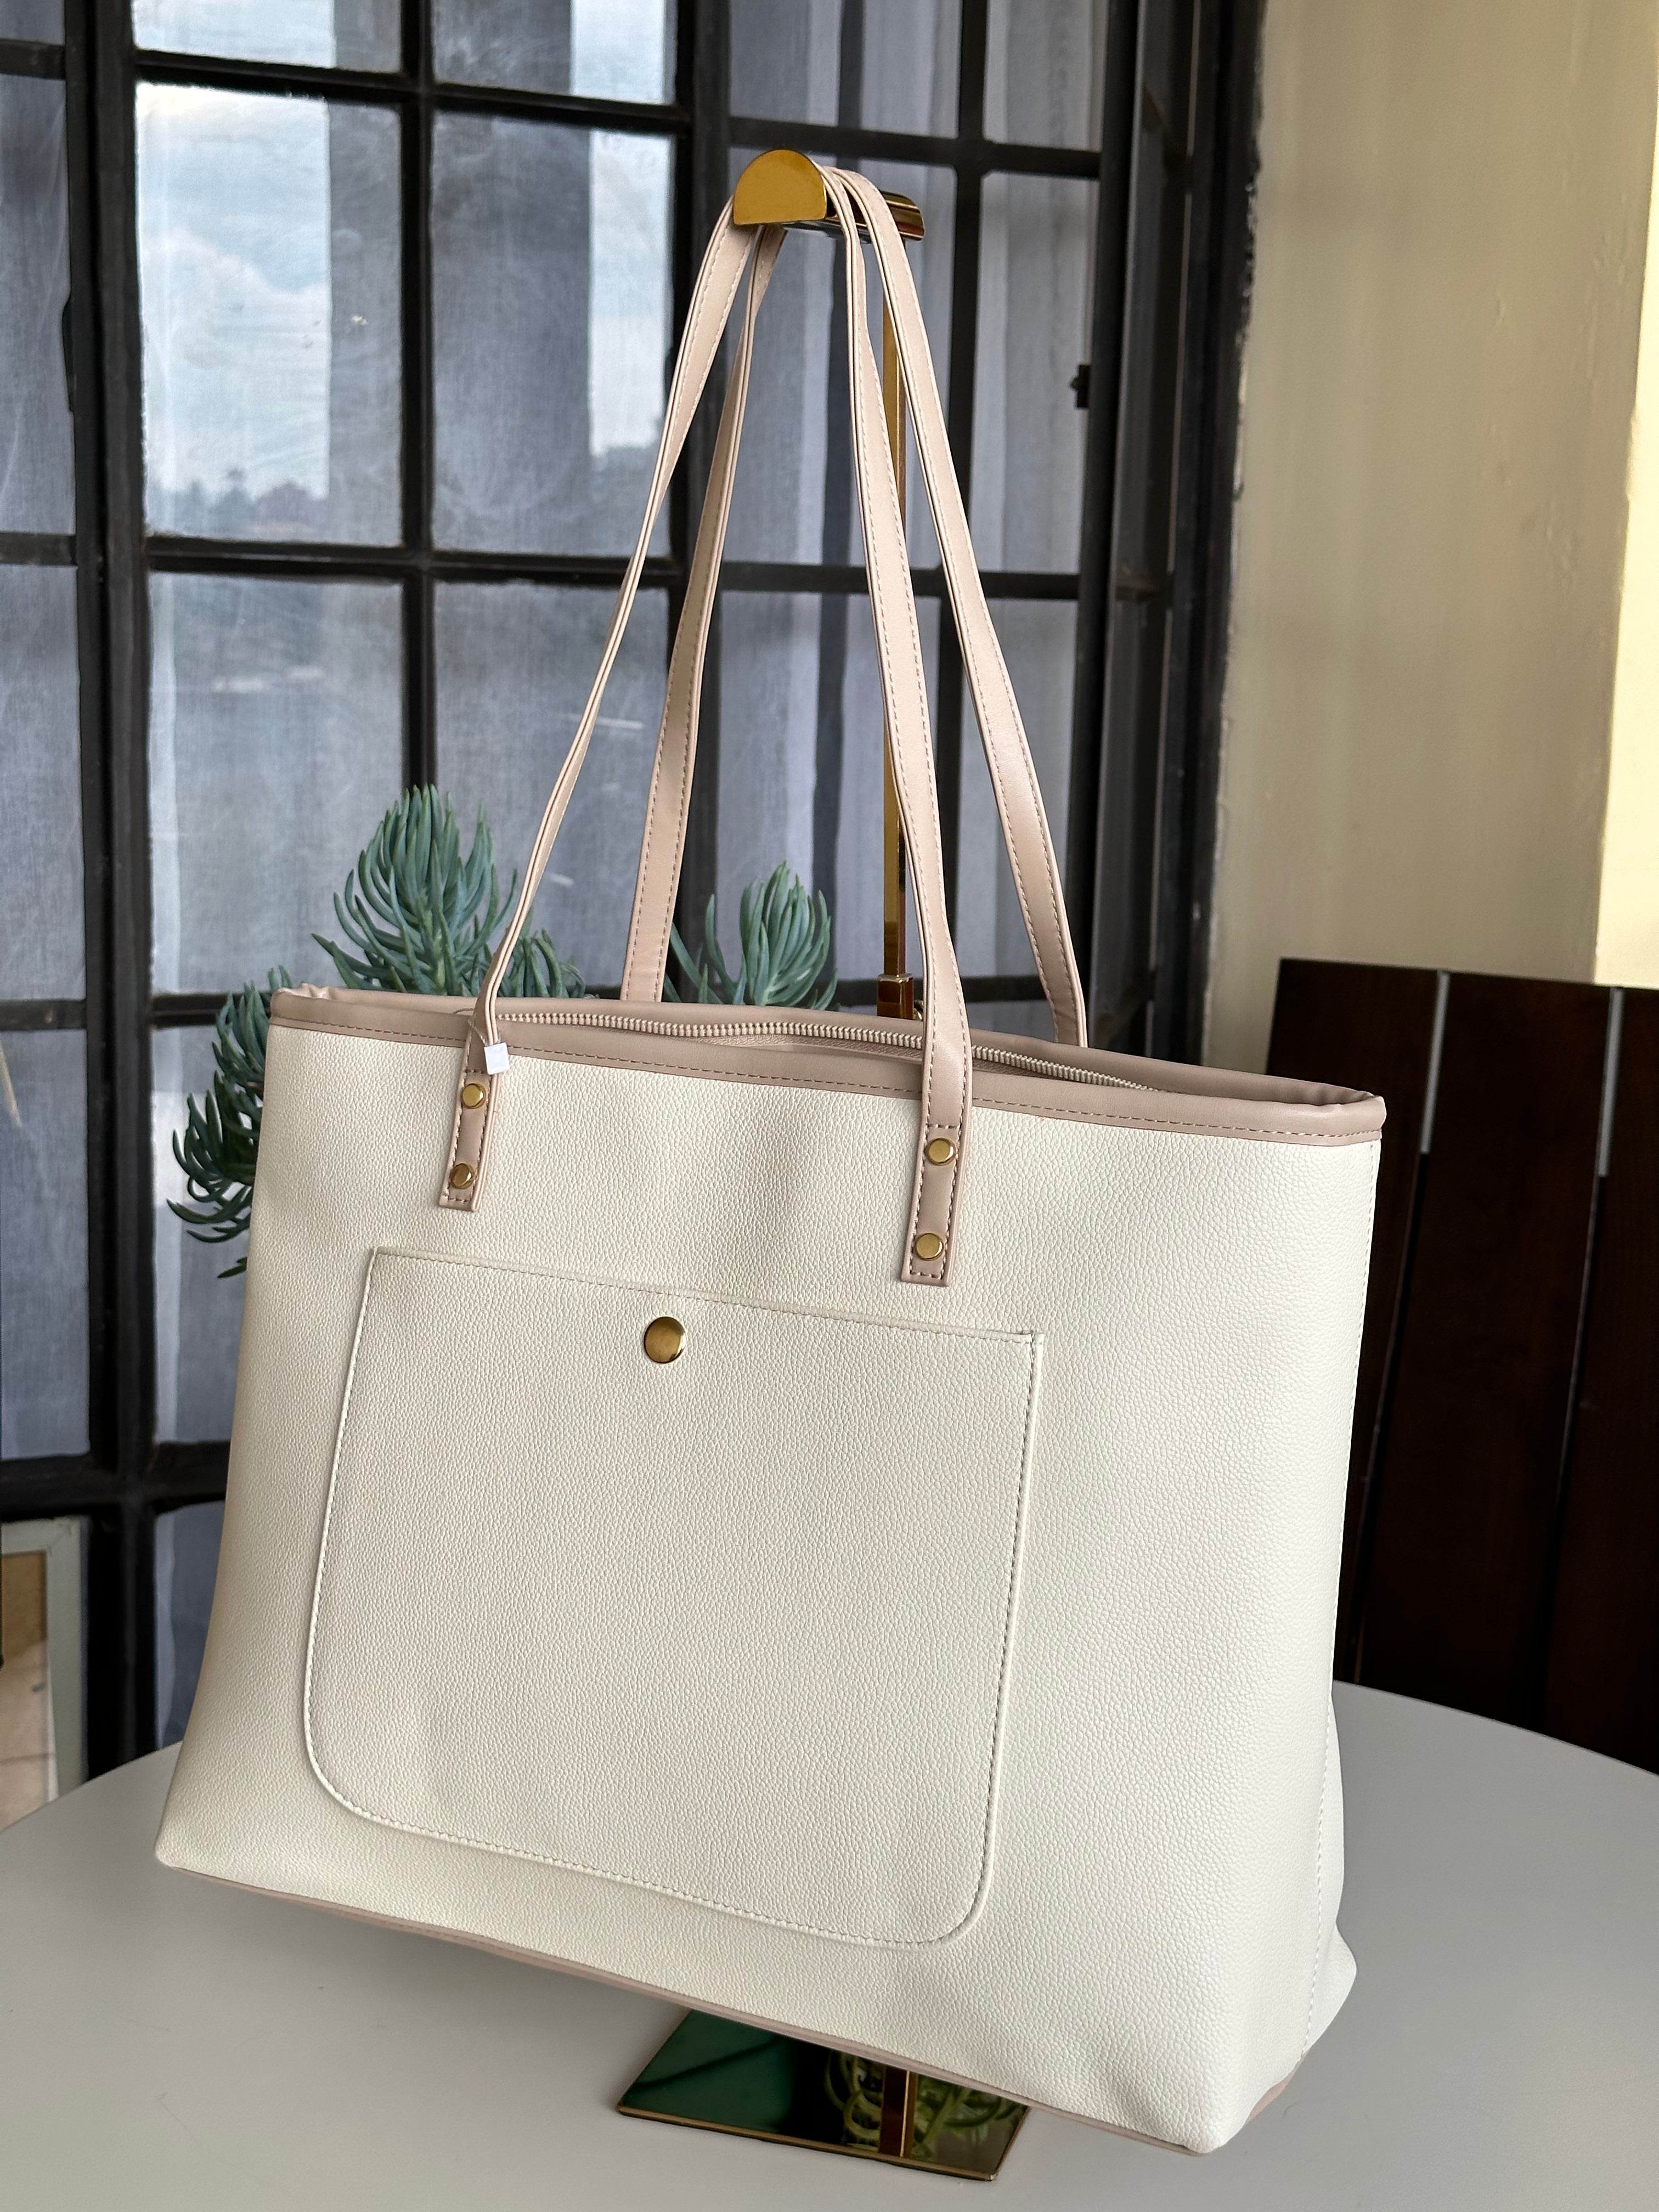 Handbag tote with cream lining